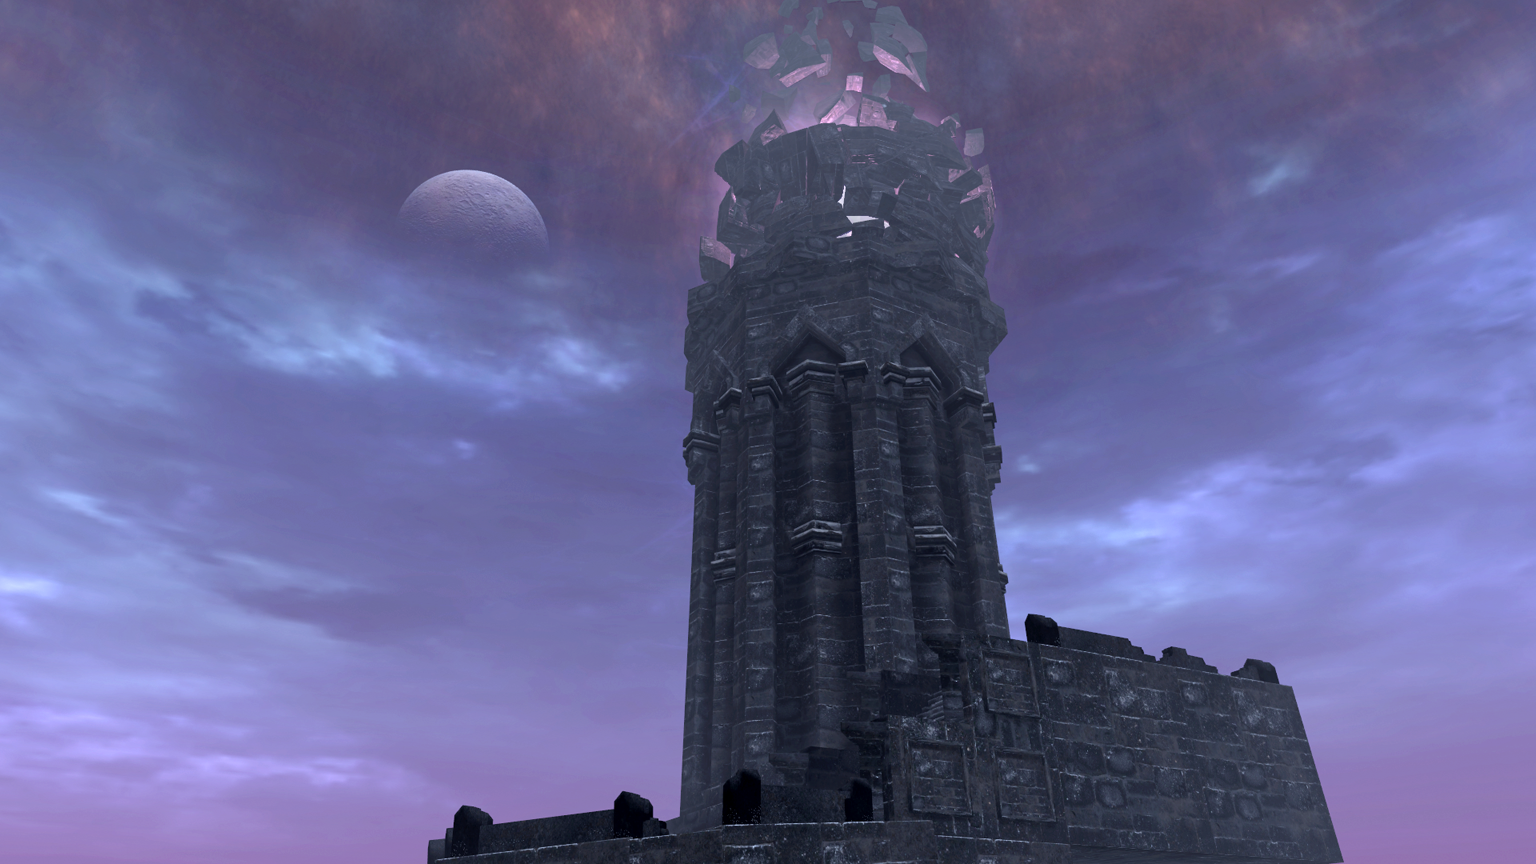 The Elder Scrolls адамантитовая башня